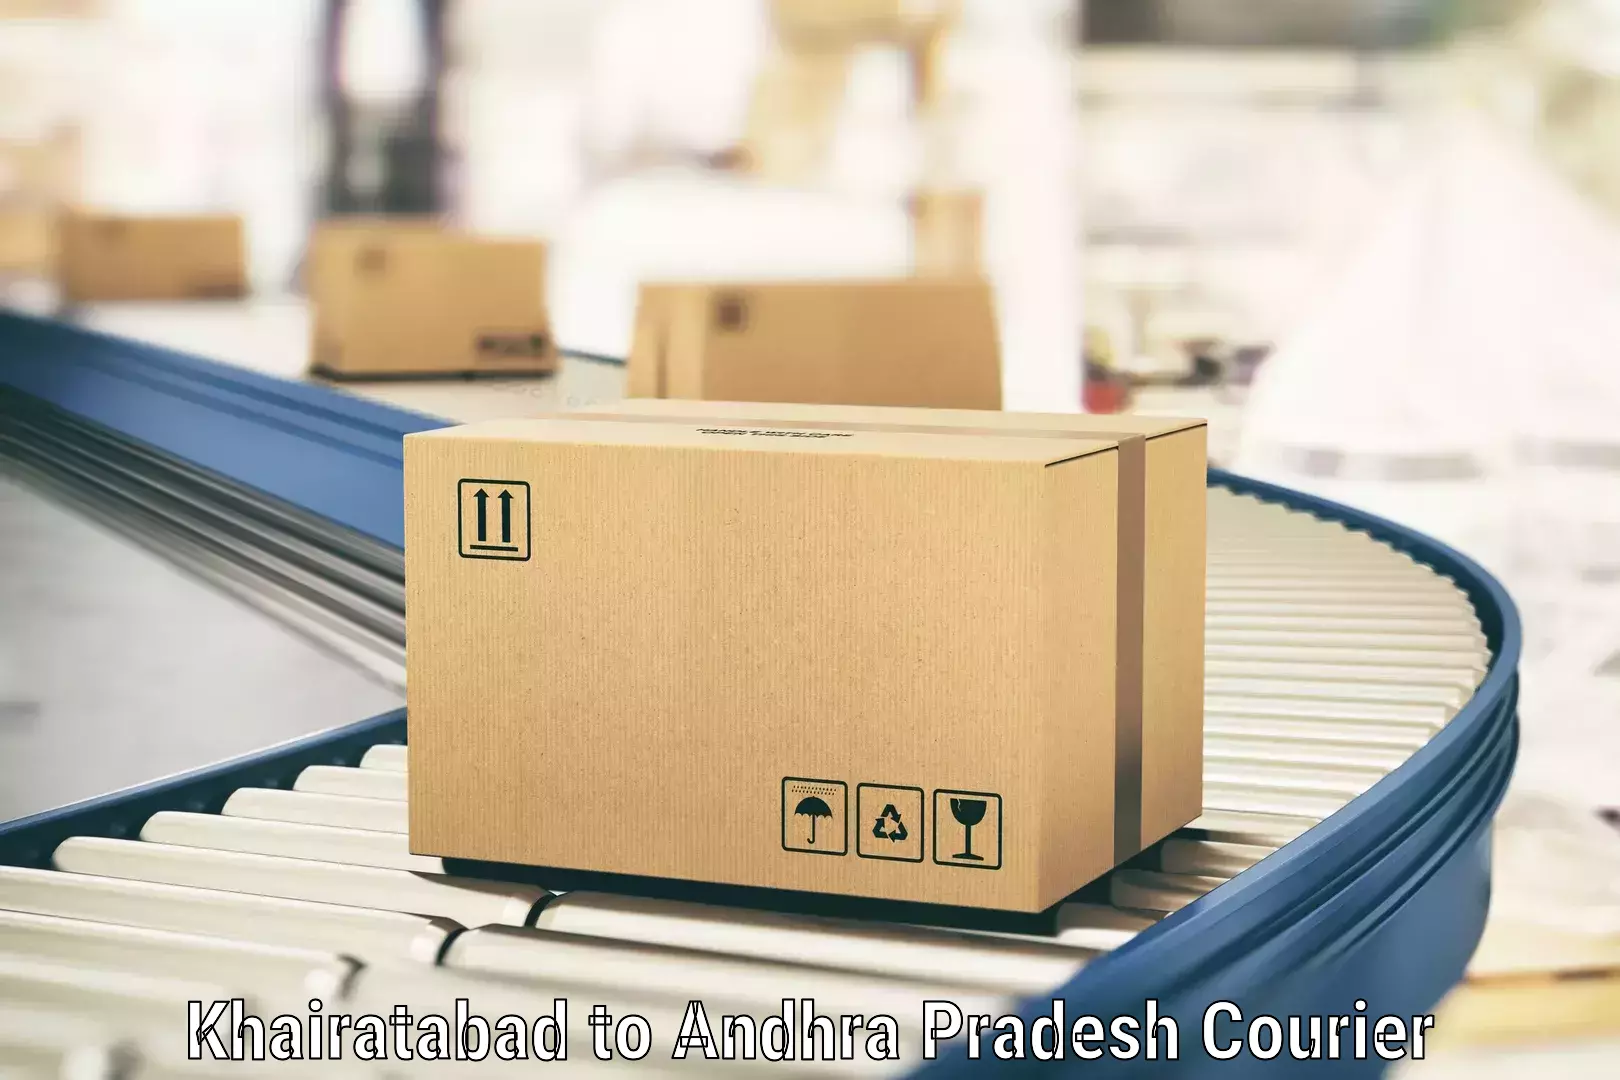 Premium courier services in Khairatabad to Andhra Pradesh